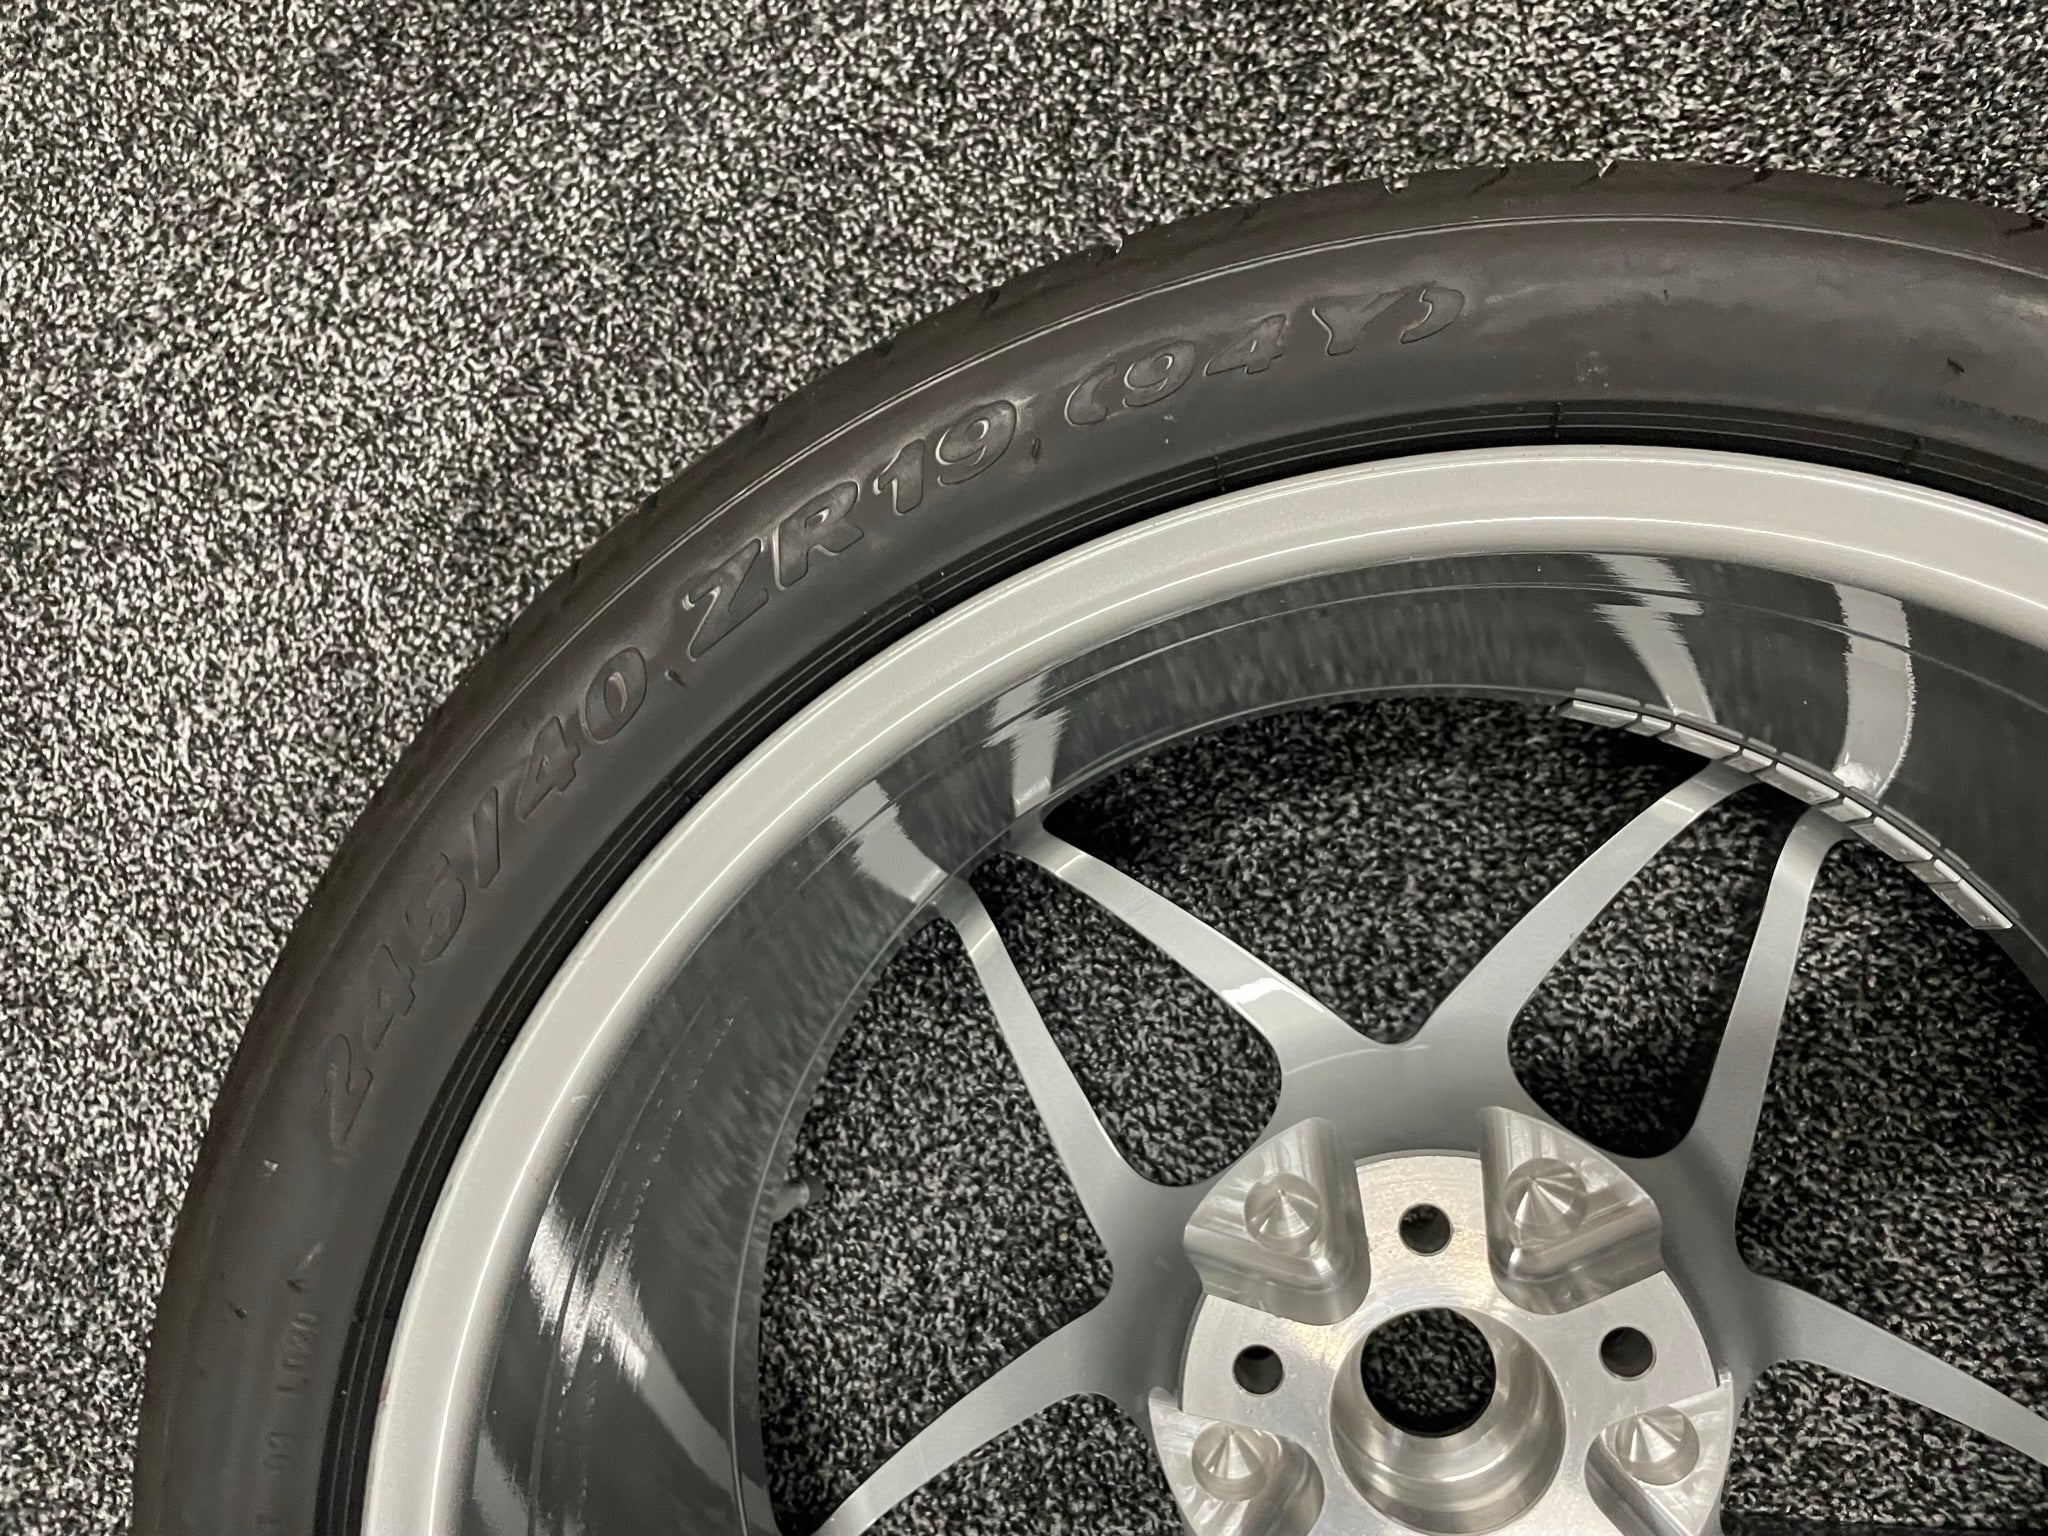 Full Set for Ferrari California - Pirelli Tire and 19" Wheel Set - 252607 / 252606